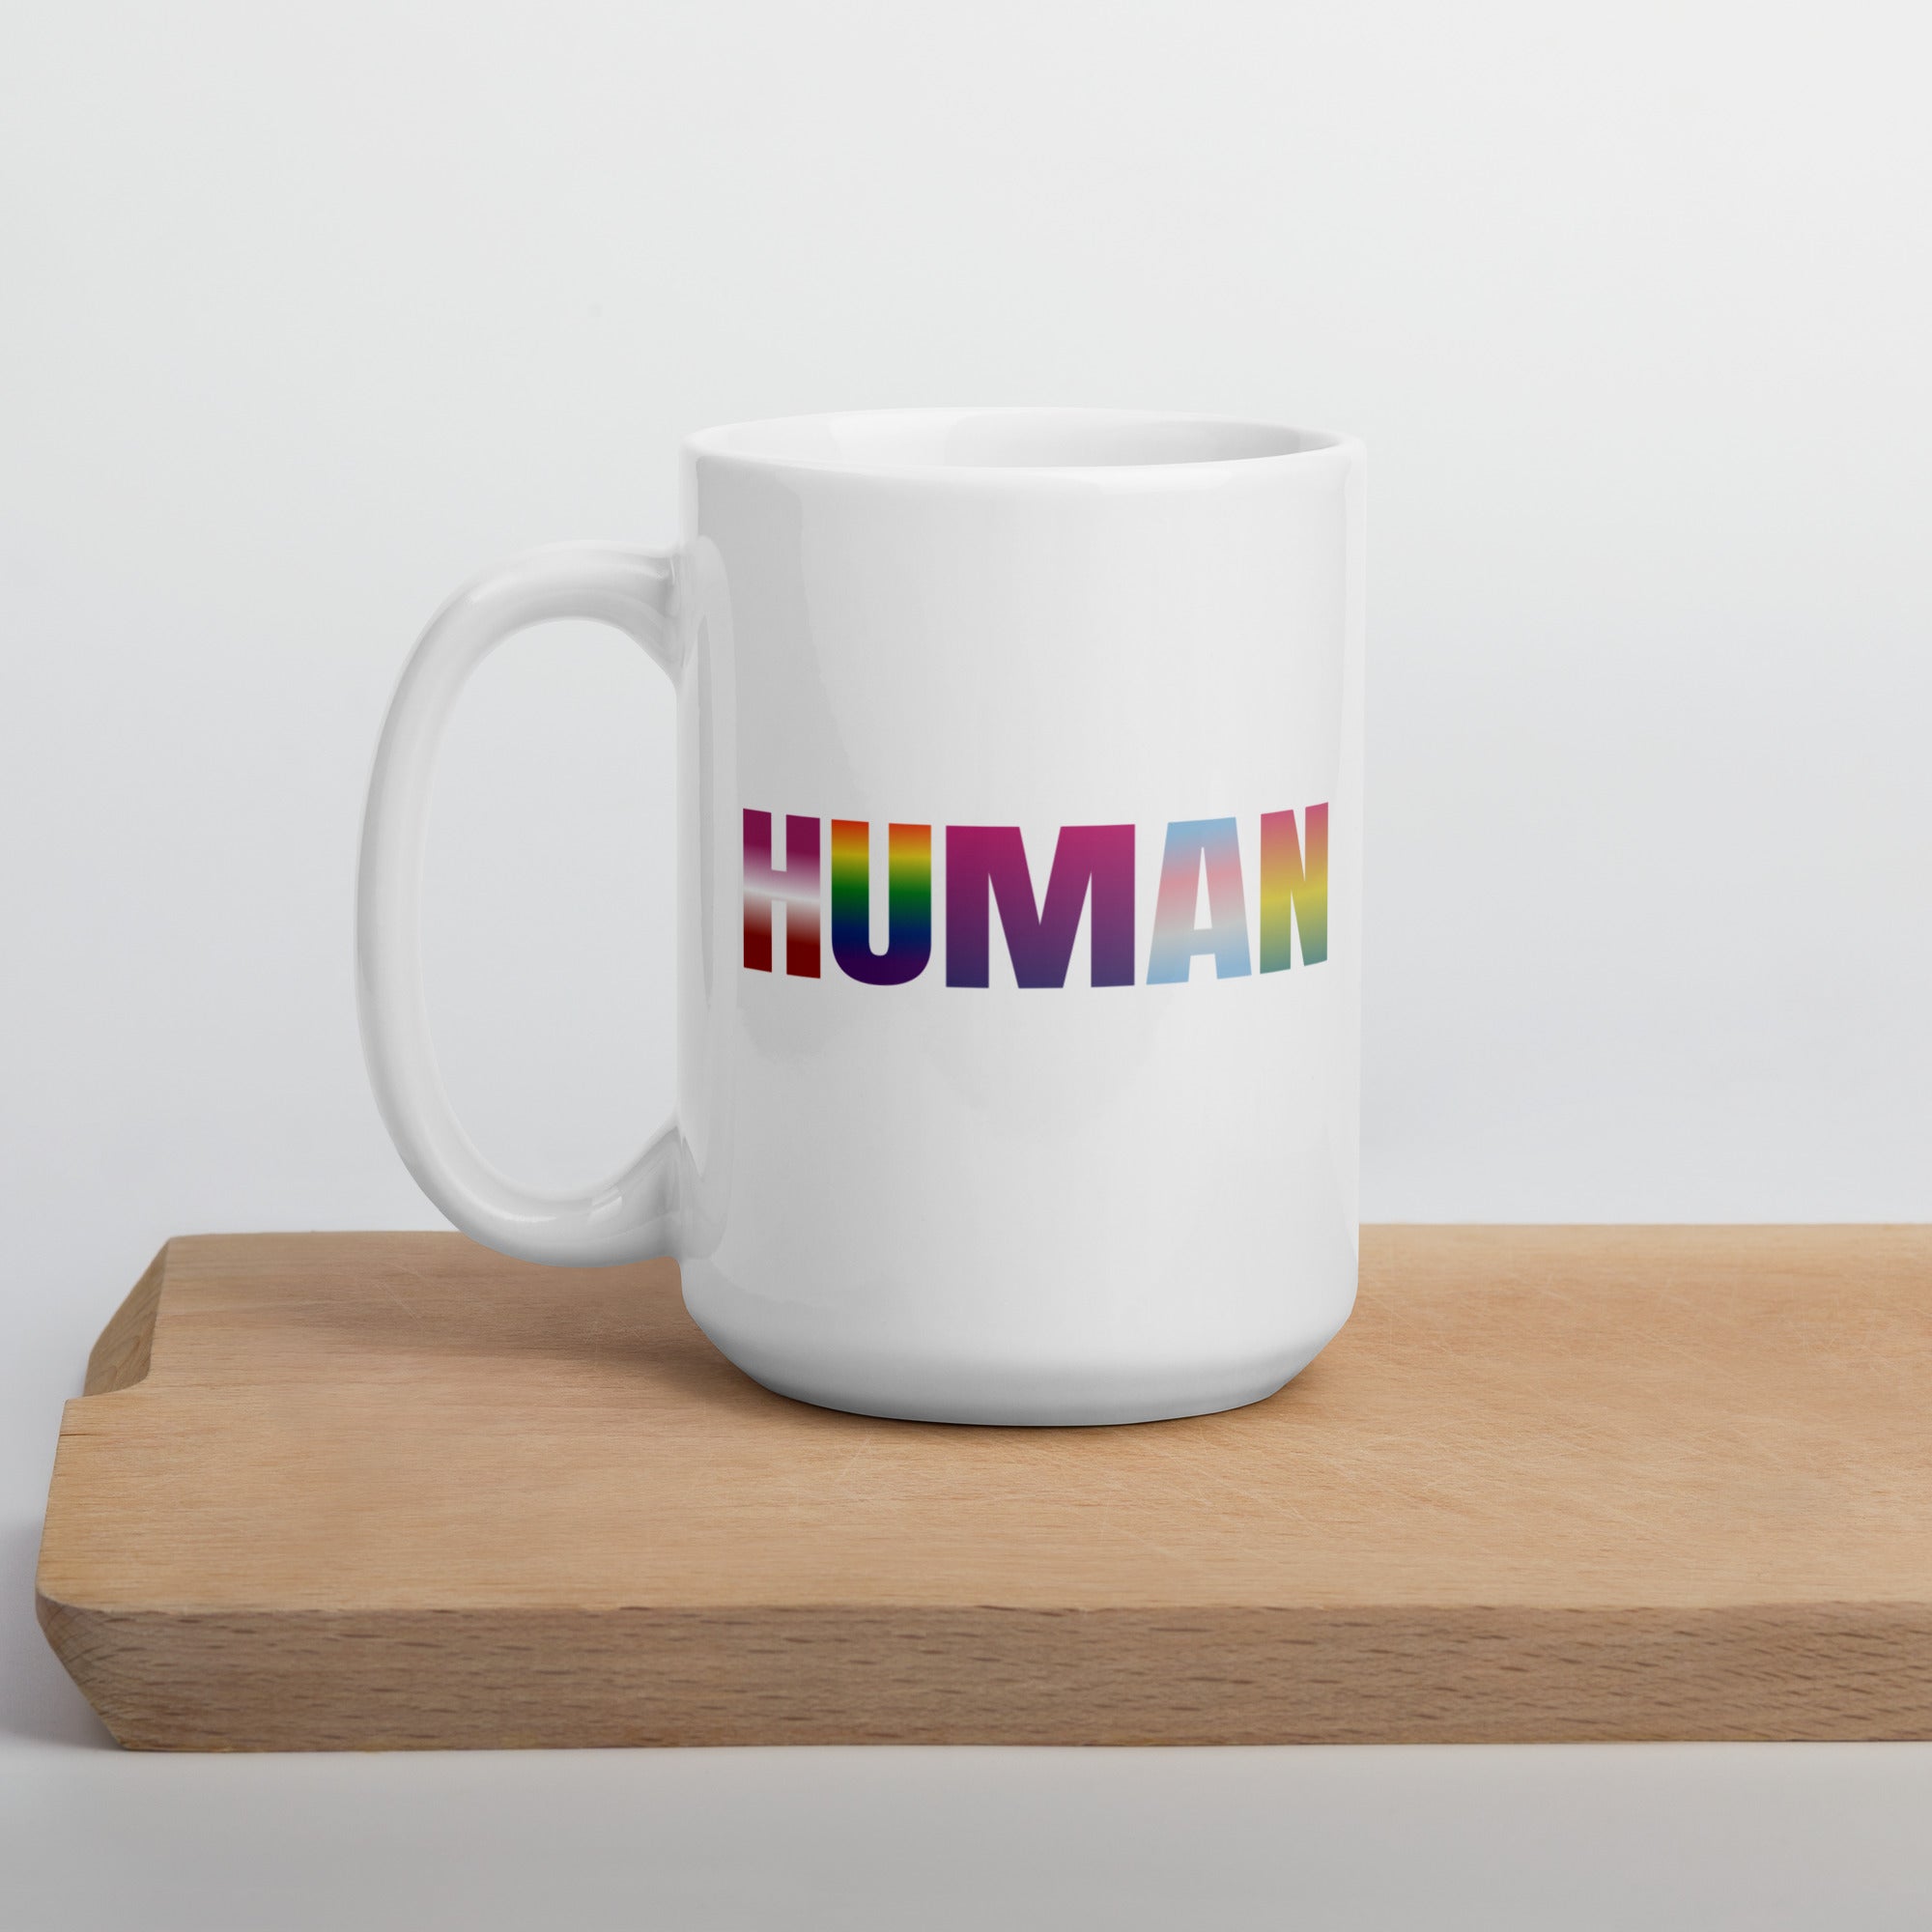 HUMAN - White Glossy Mug